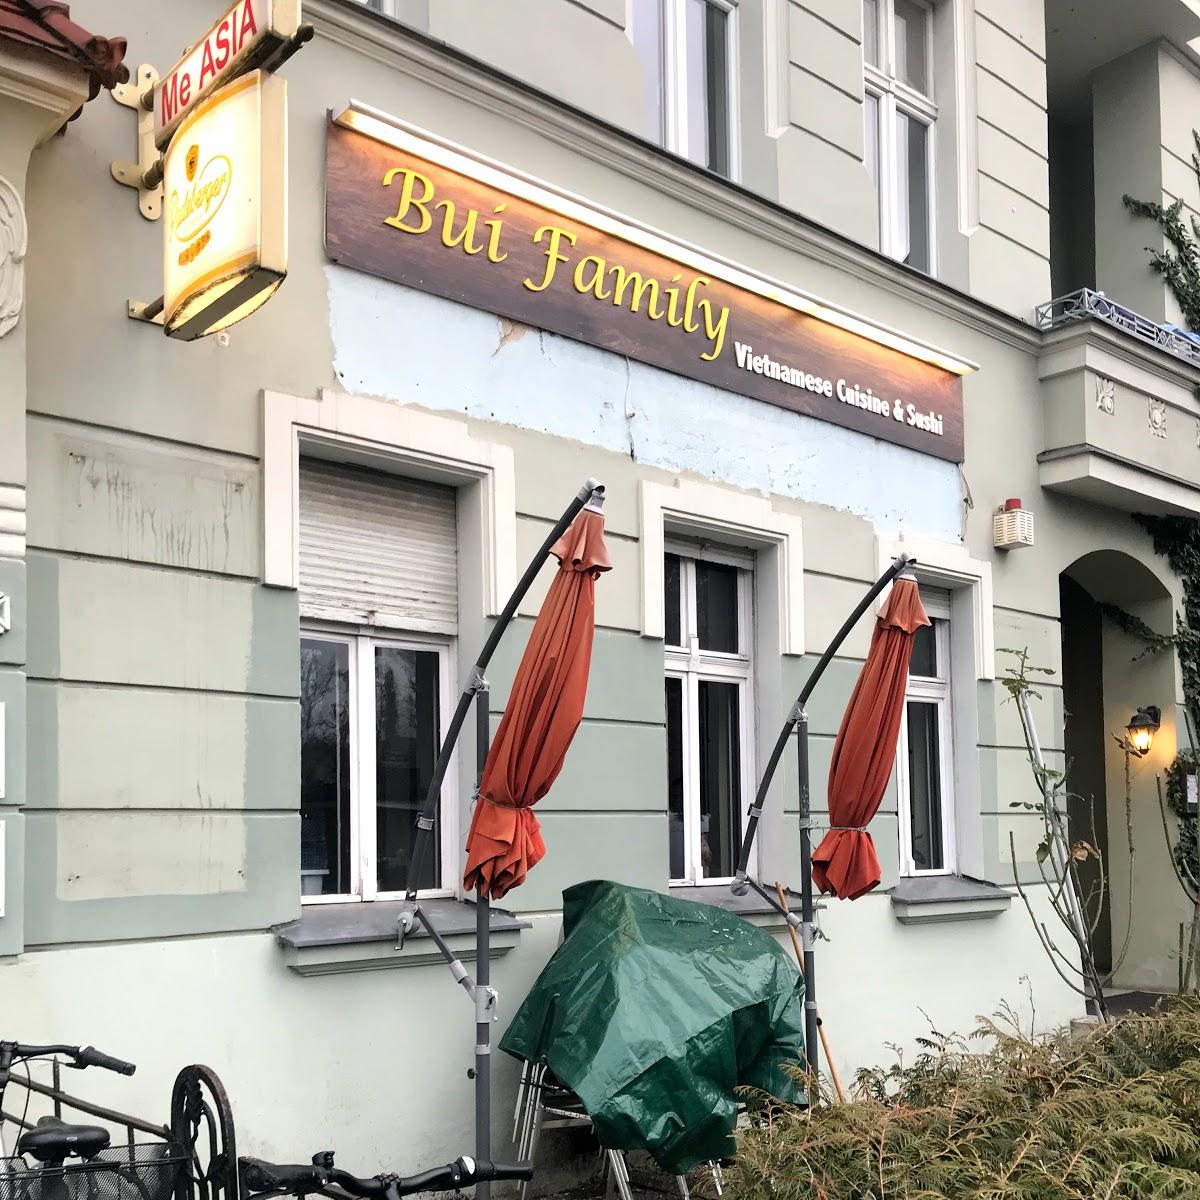 Restaurant "Bui Family Restaurant" in Berlin